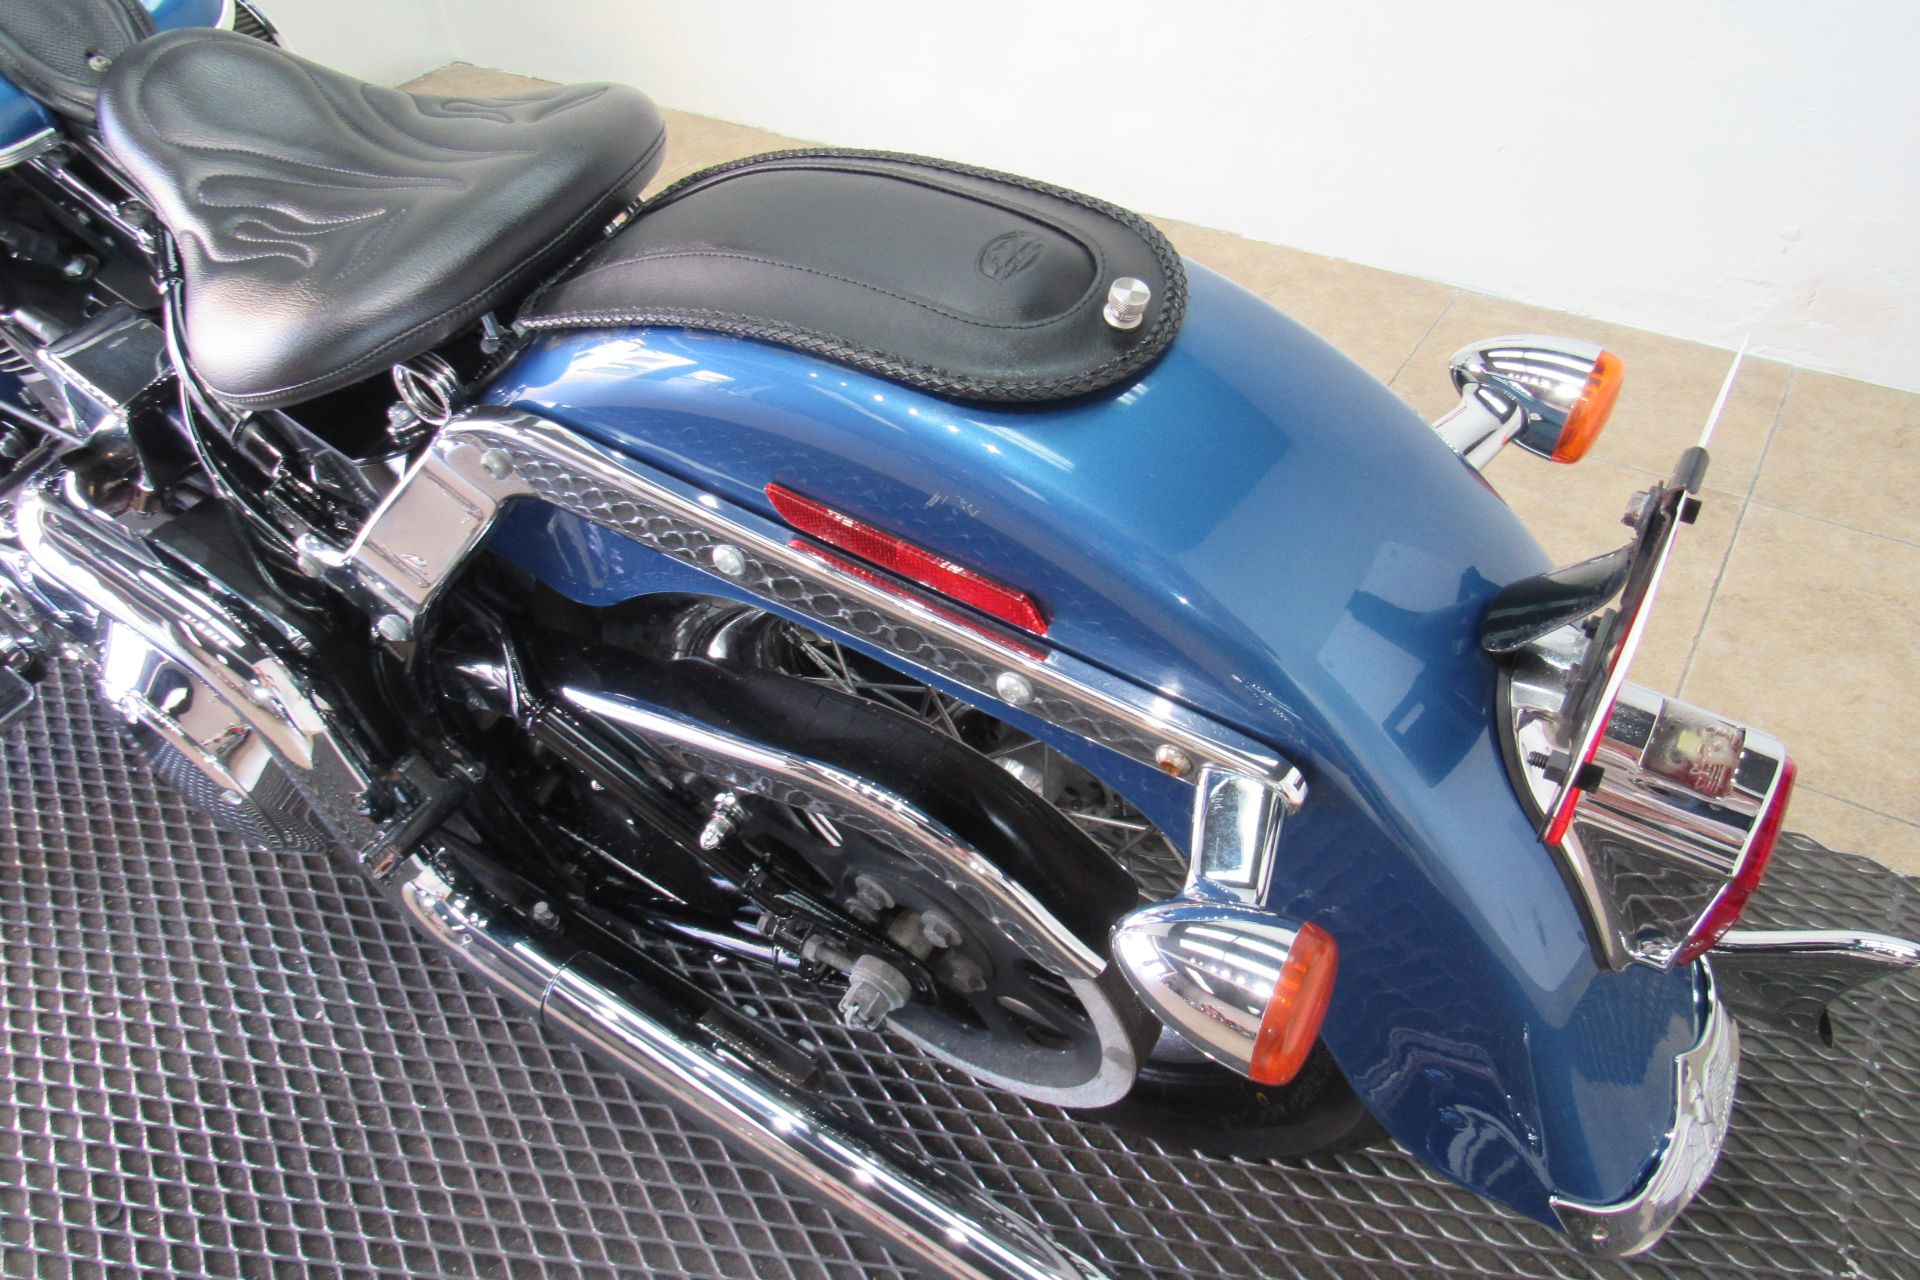 2005 Harley-Davidson FLSTSC/FLSTSCI Softail® Springer® Classic in Temecula, California - Photo 31